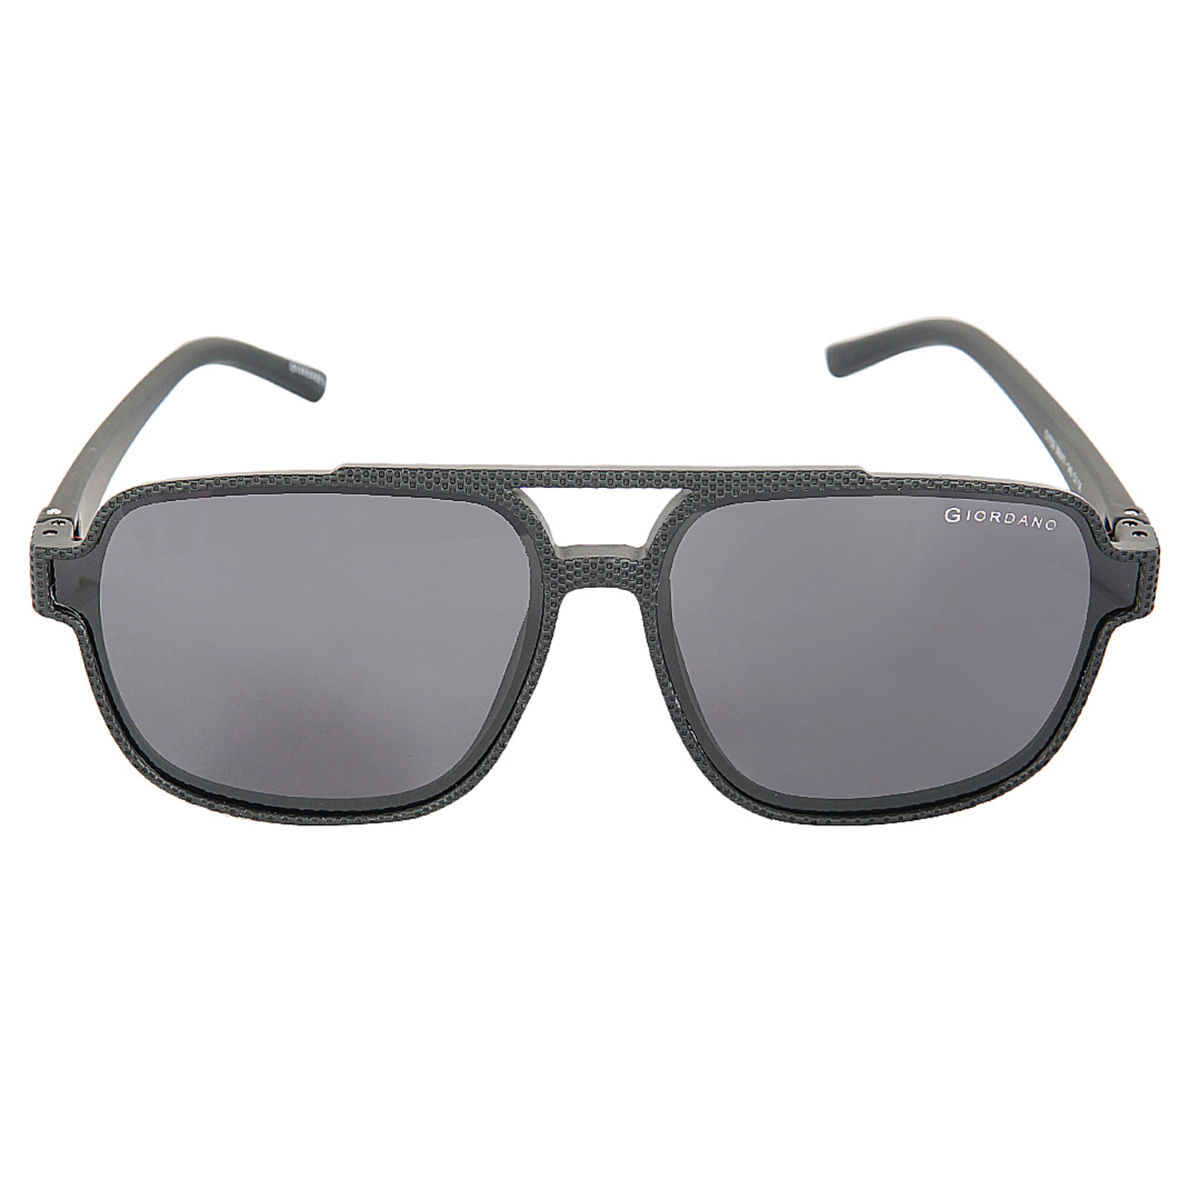 Giordano Women Sunglasses : Buy Giordano Polarized Sunglasses Uv Protected  Use for Men & Women - Ga90298C01 (50) Online | Nykaa Fashion